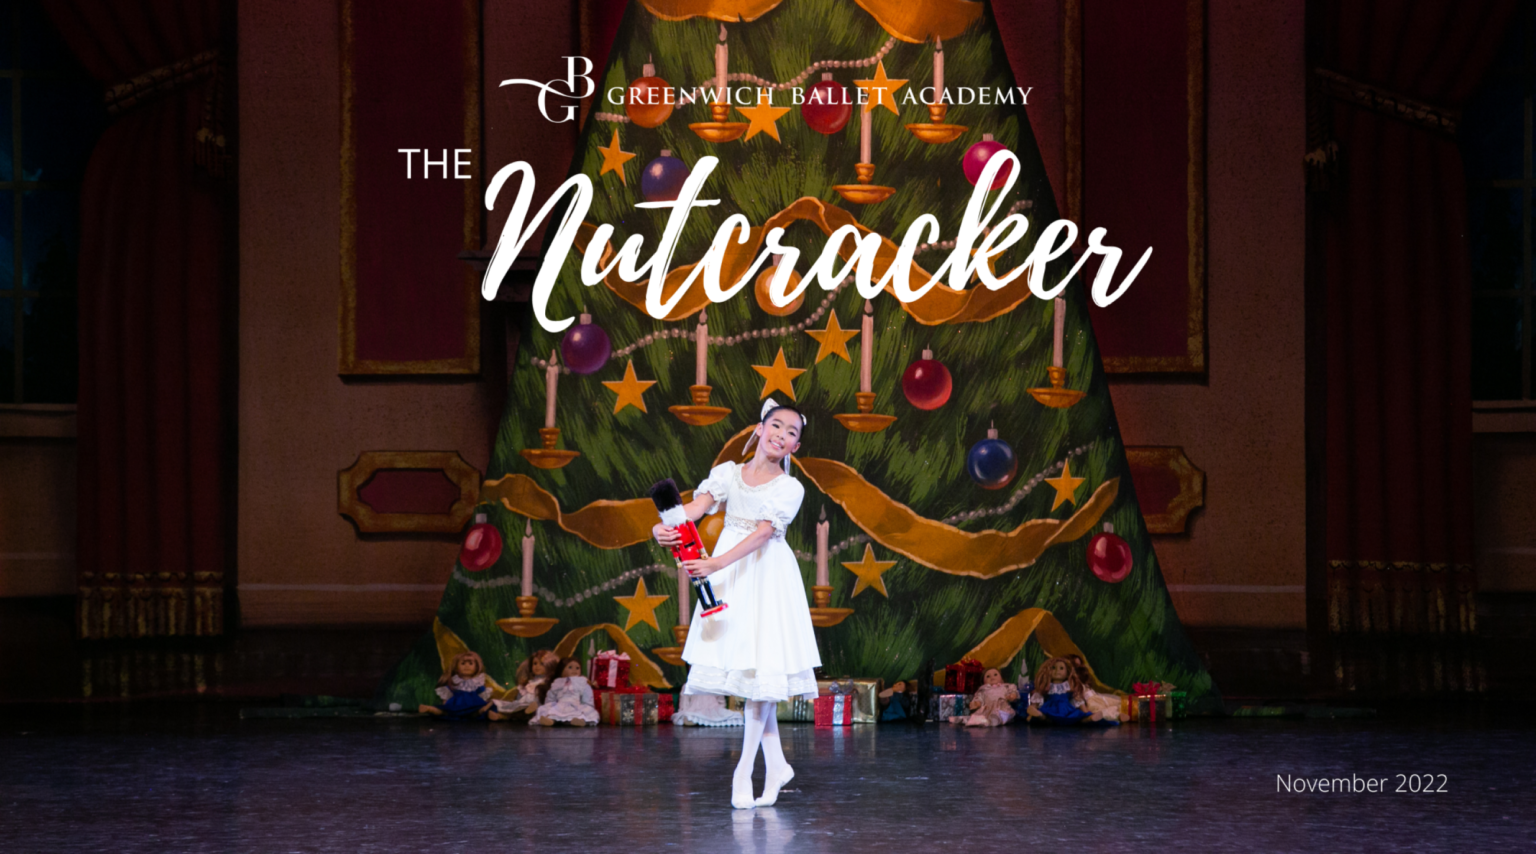 GBA Nutcracker Ballet 2022 Performance Tickets On Sale Now